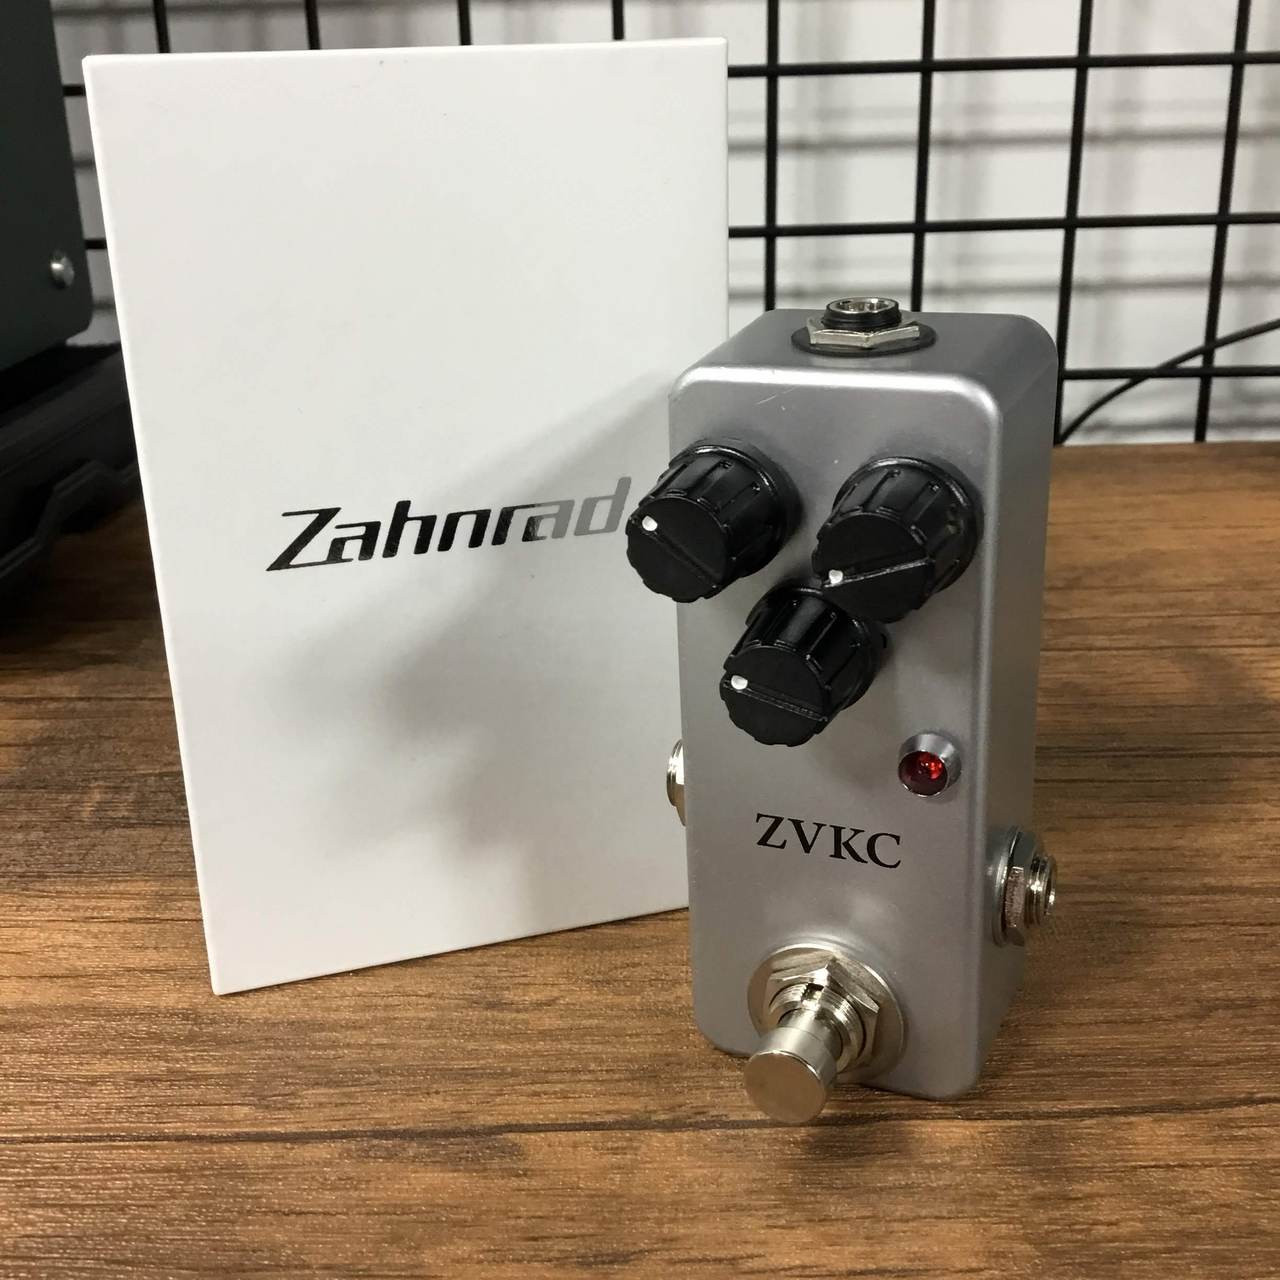 Zahnrad by nature sound ZVKC ツァーンラート 【 長崎浜町店